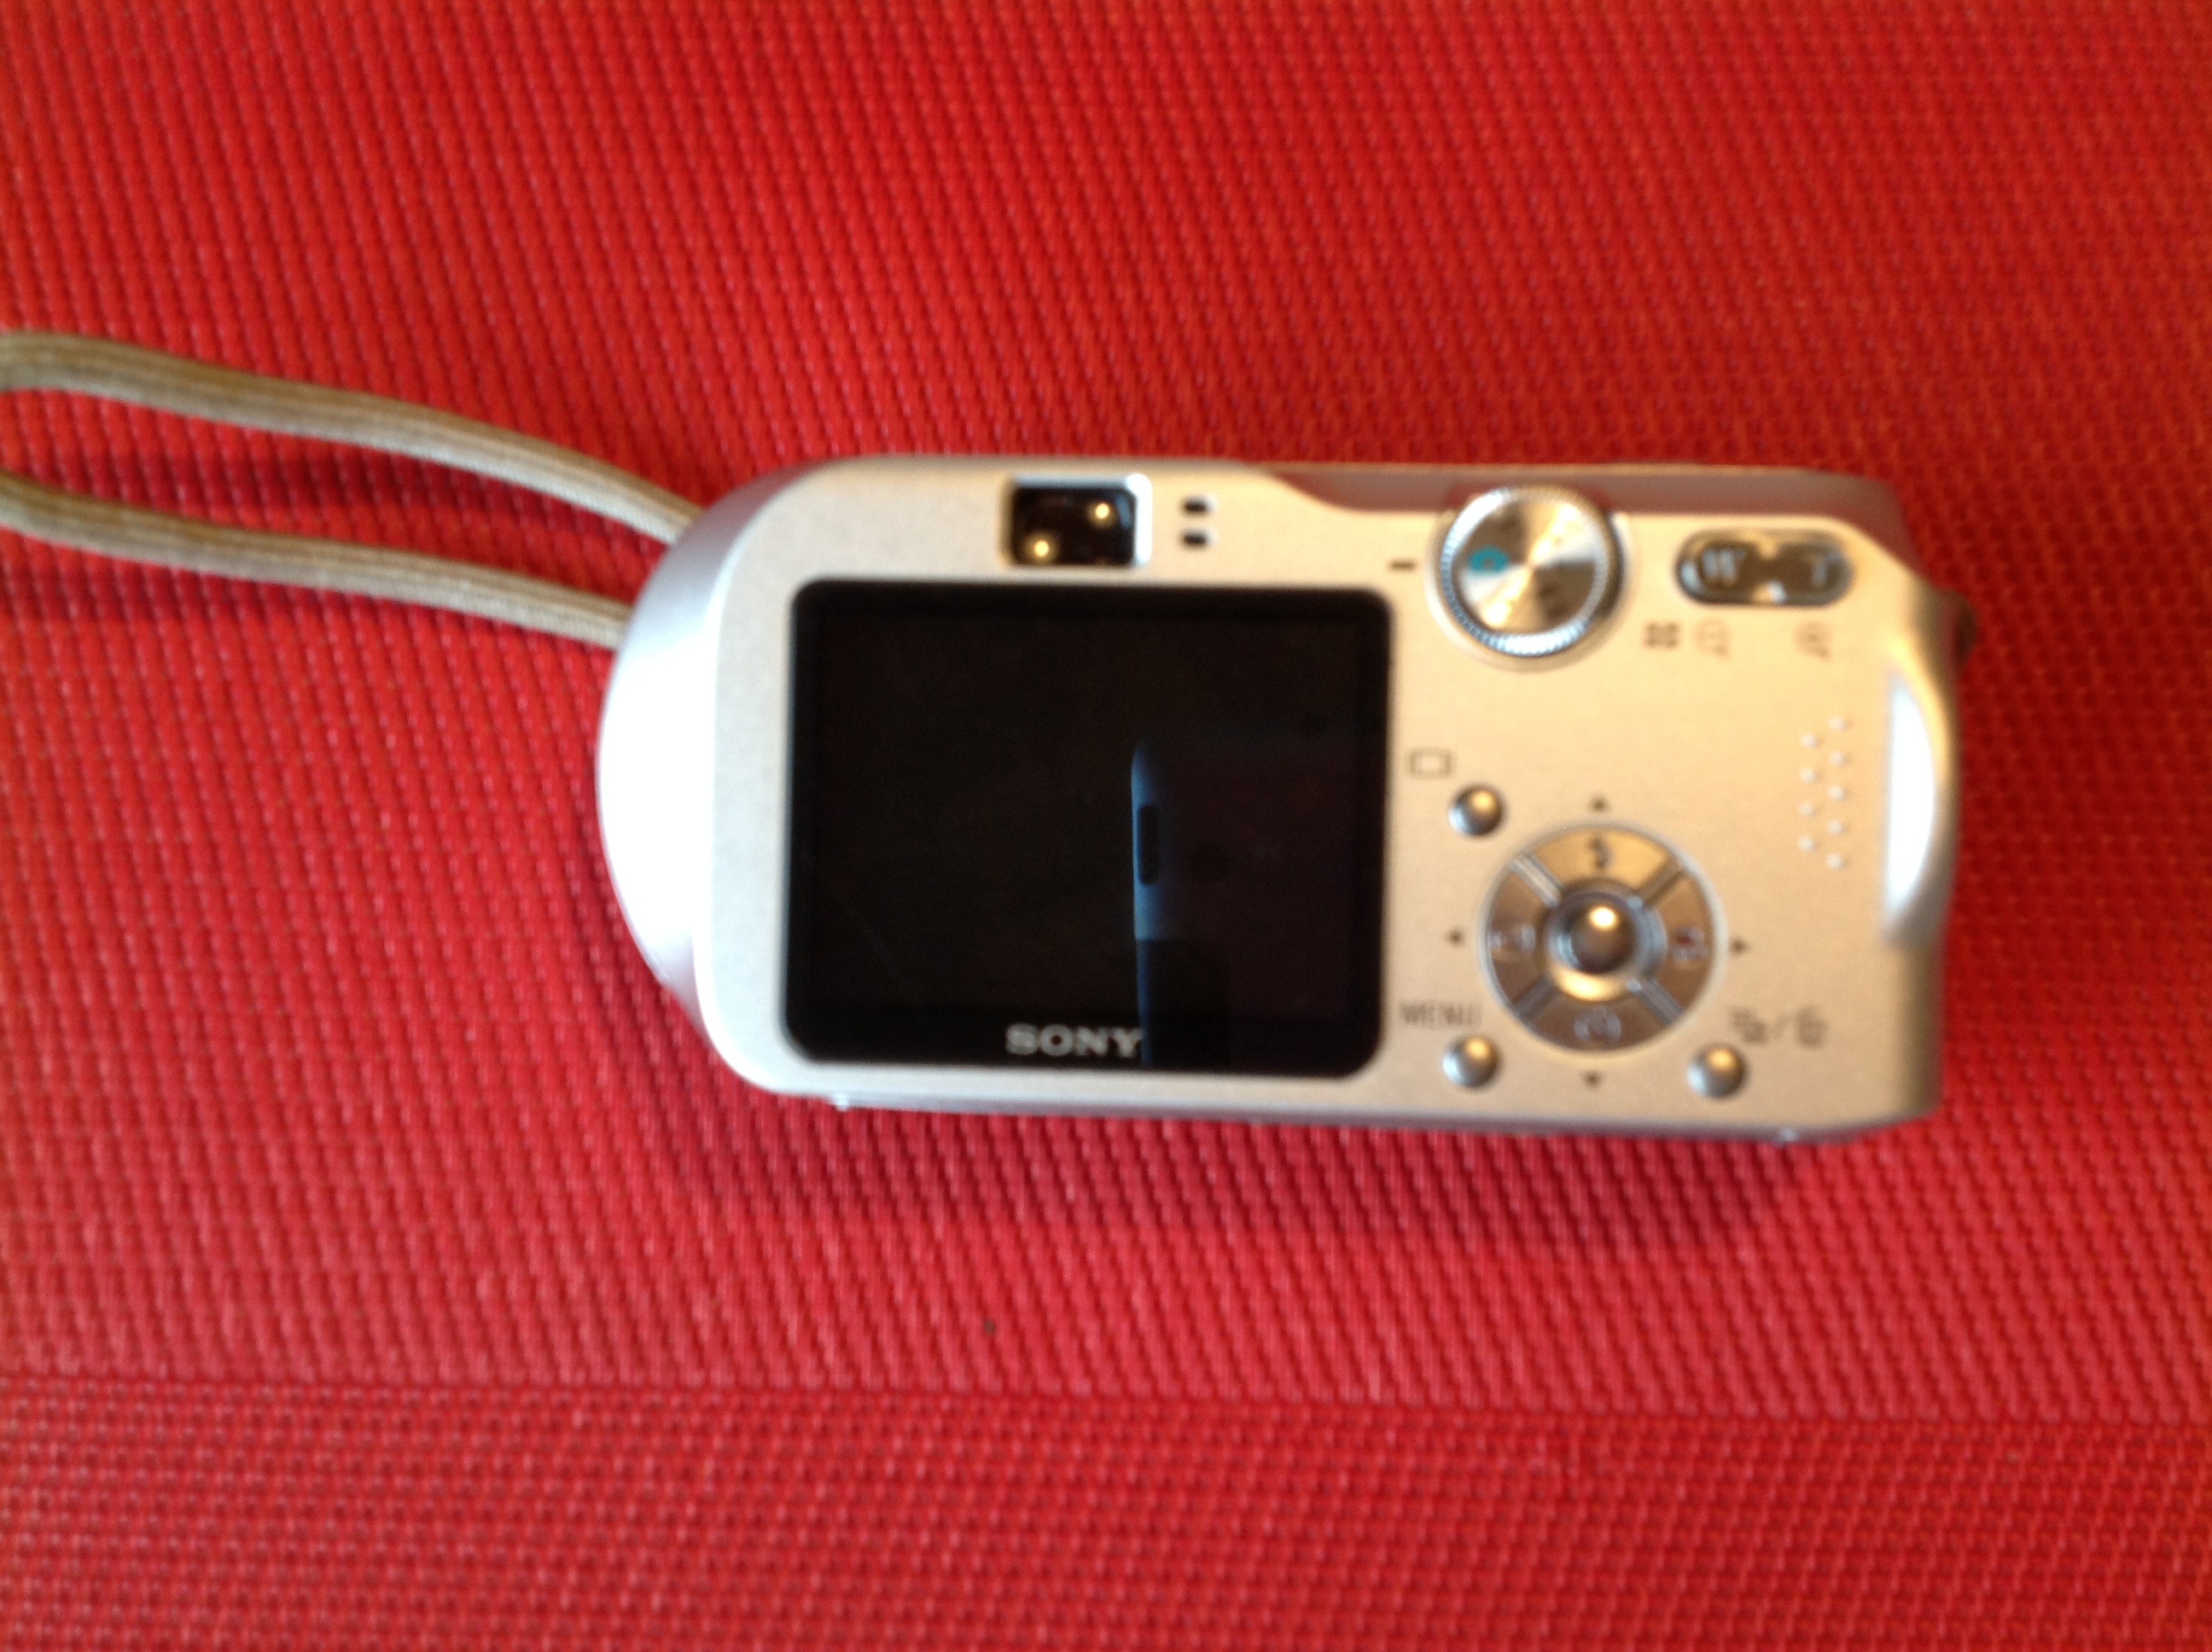 Sony Kamera DSC-P200, Cybershot 7.2 Mega Pixels, 3 x Optical Zoom (Red)